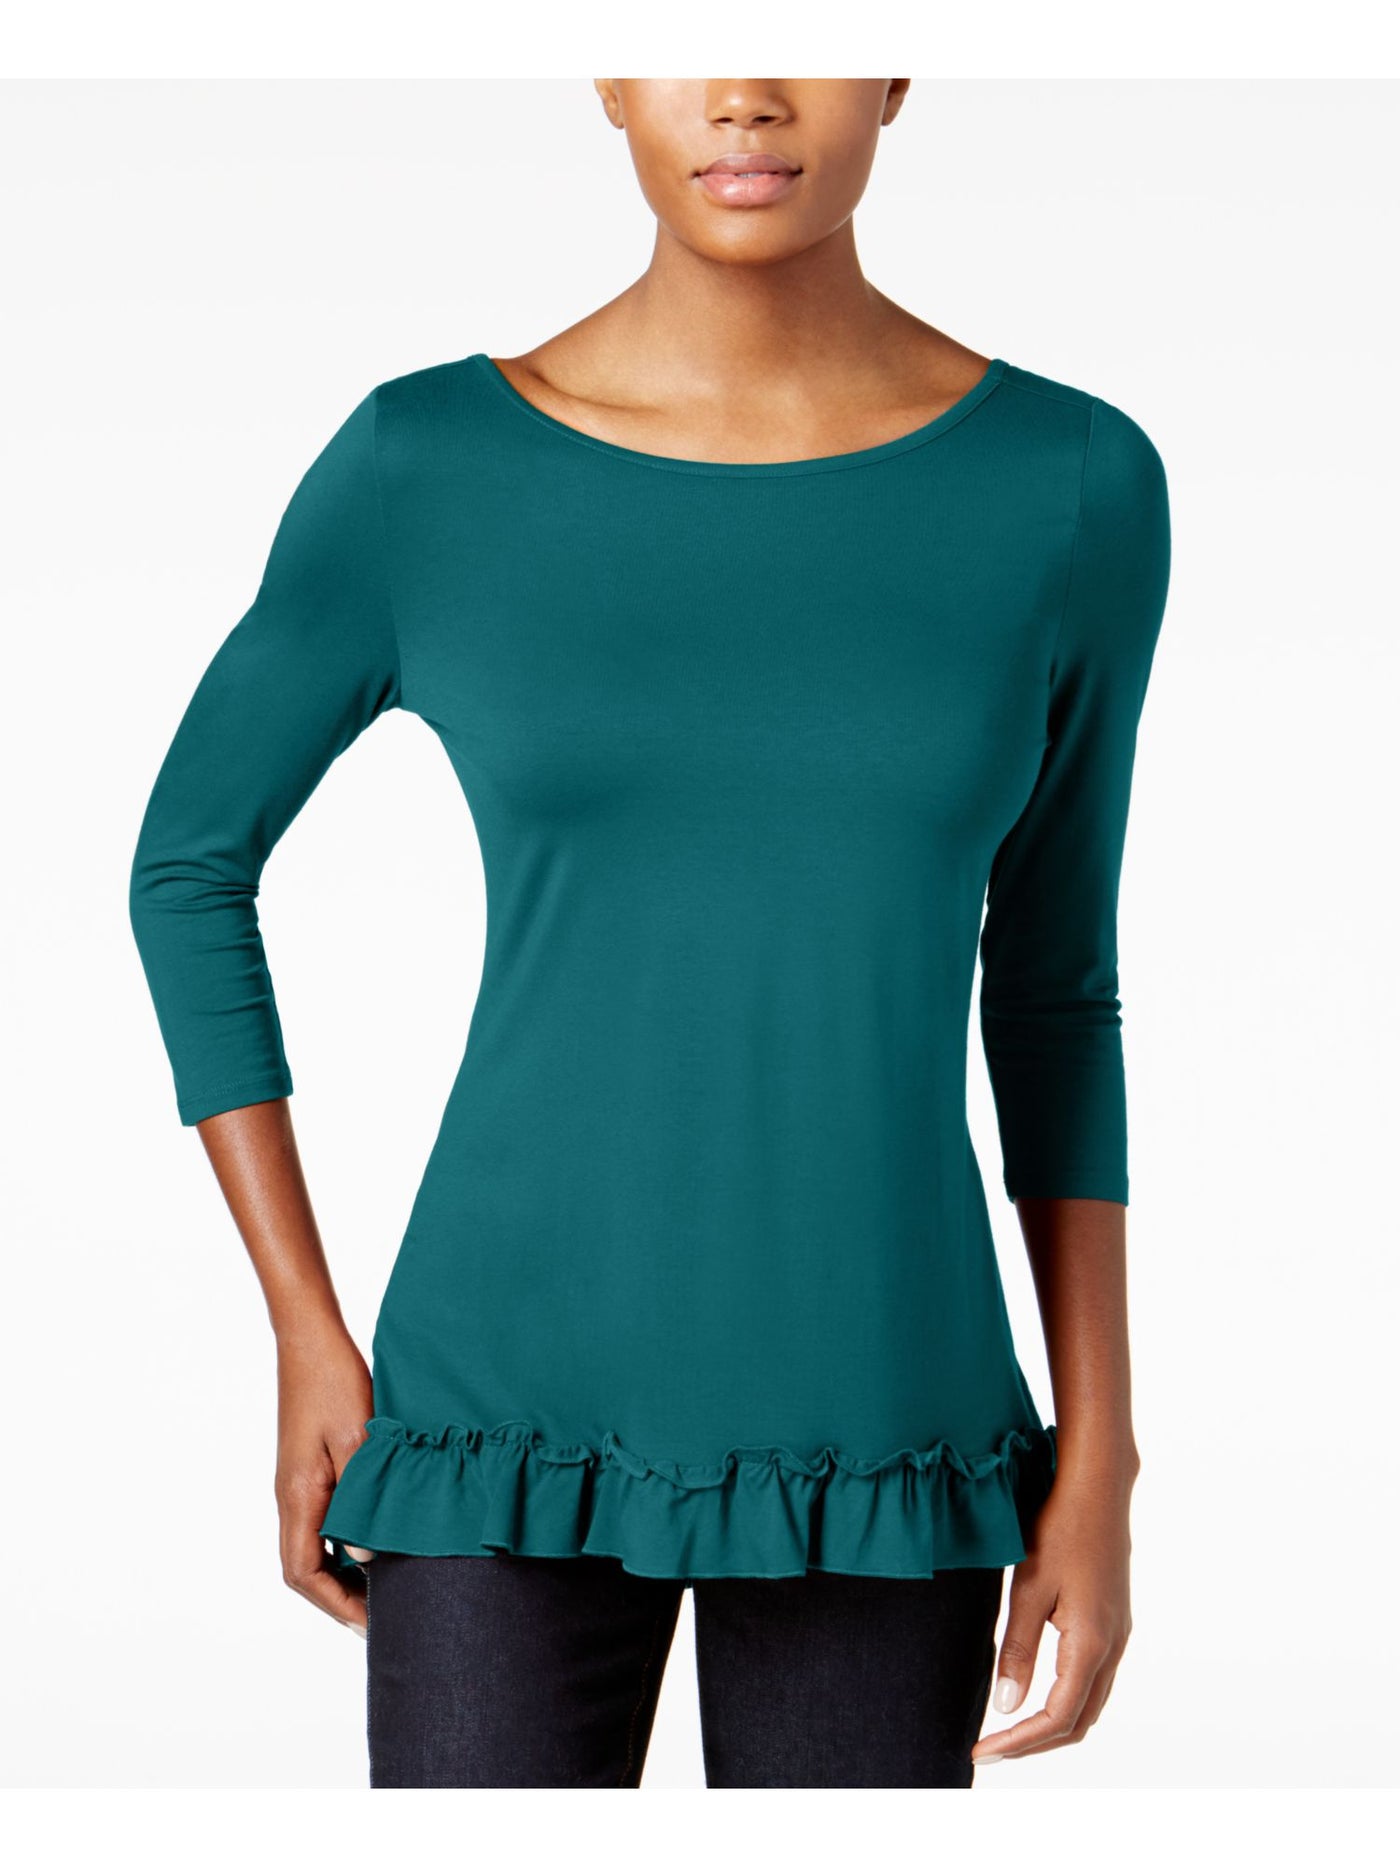 LOVE SCARLETT Womens Teal 3/4 Sleeve Jewel Neck T-Shirt Petites Size: PS